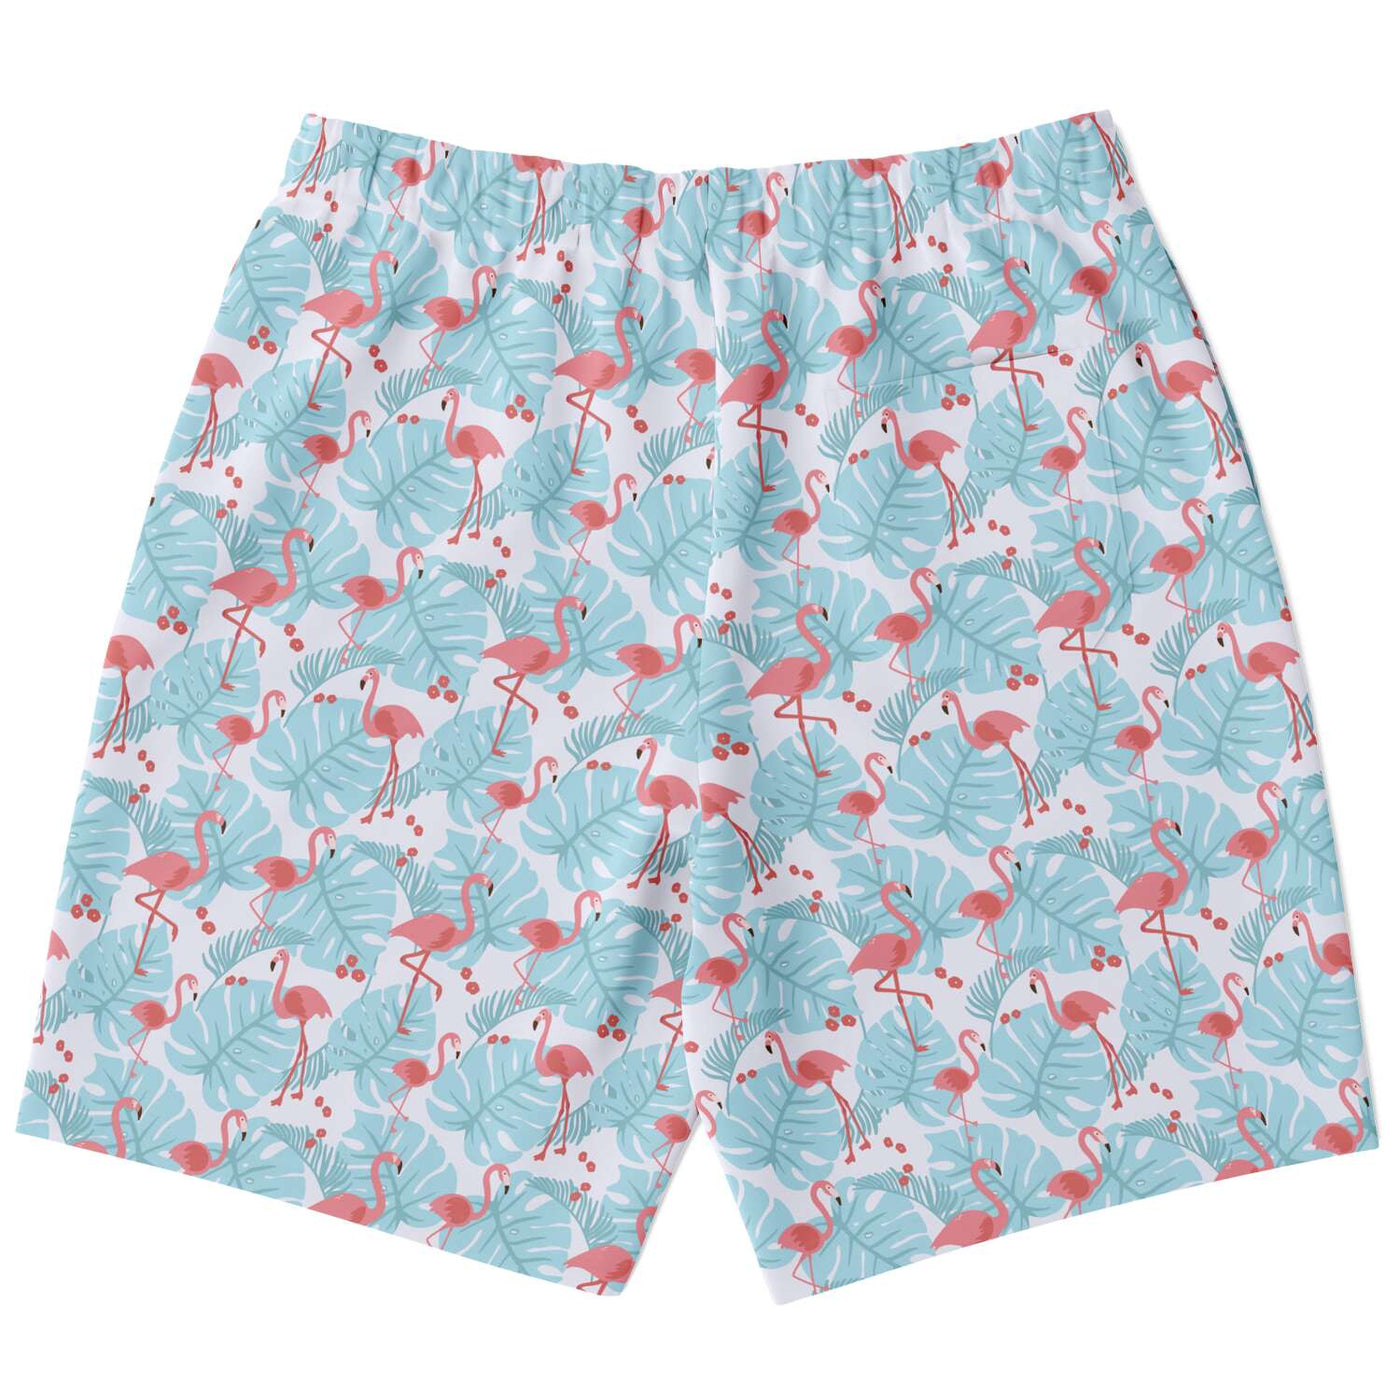 Flamingo Blue Floral Shorts Subliminator